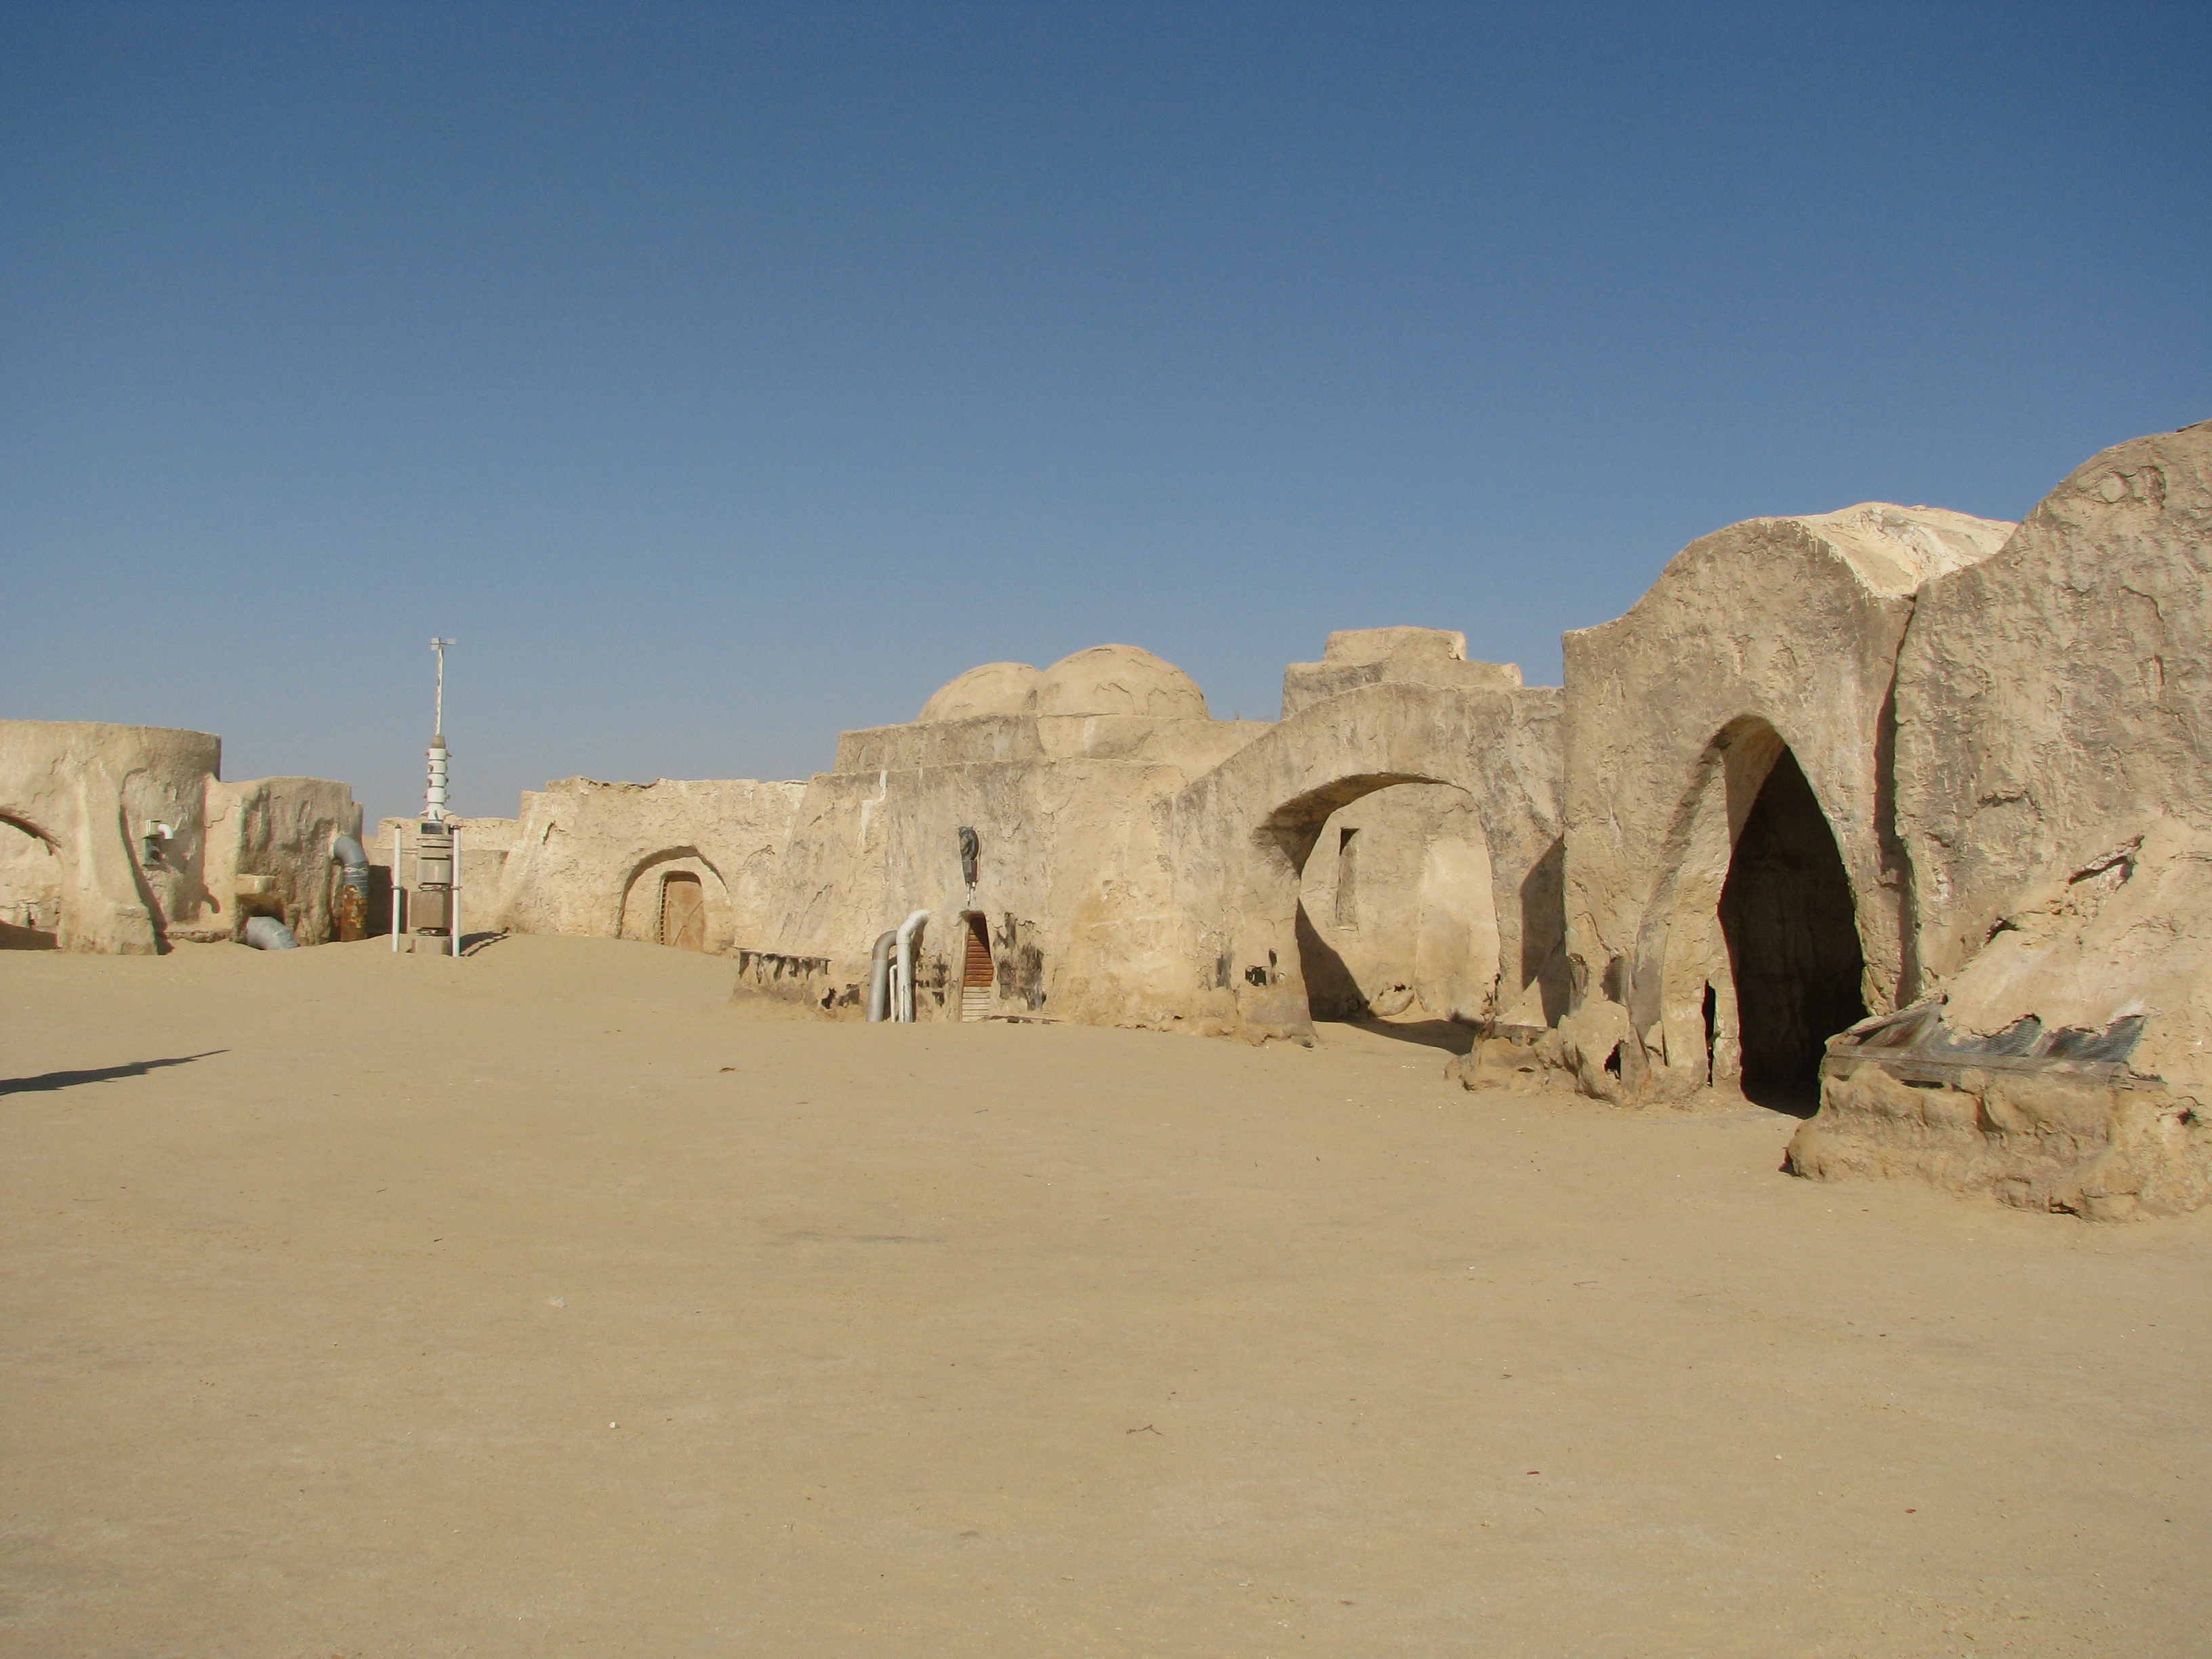 General 3264x2448 Star Wars Tatooine movies science fiction Film set